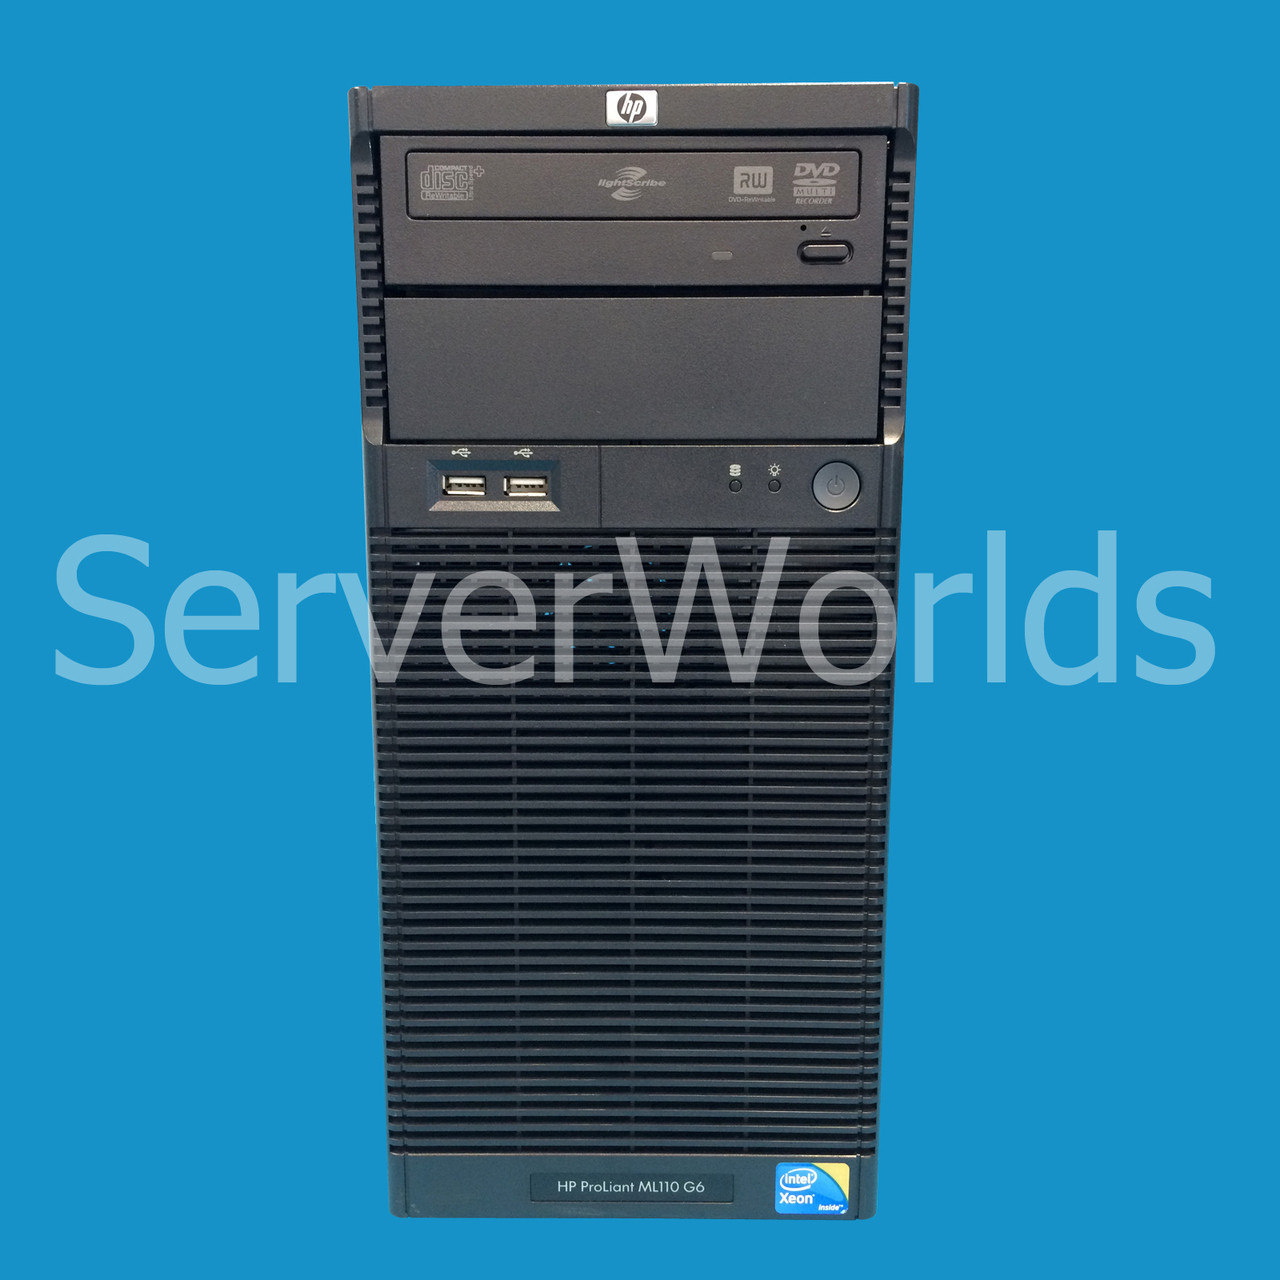 Hp 6511 S01 Refurbished Hp Ml110 G6 Server Used Ml110 G6 Server Serverworlds